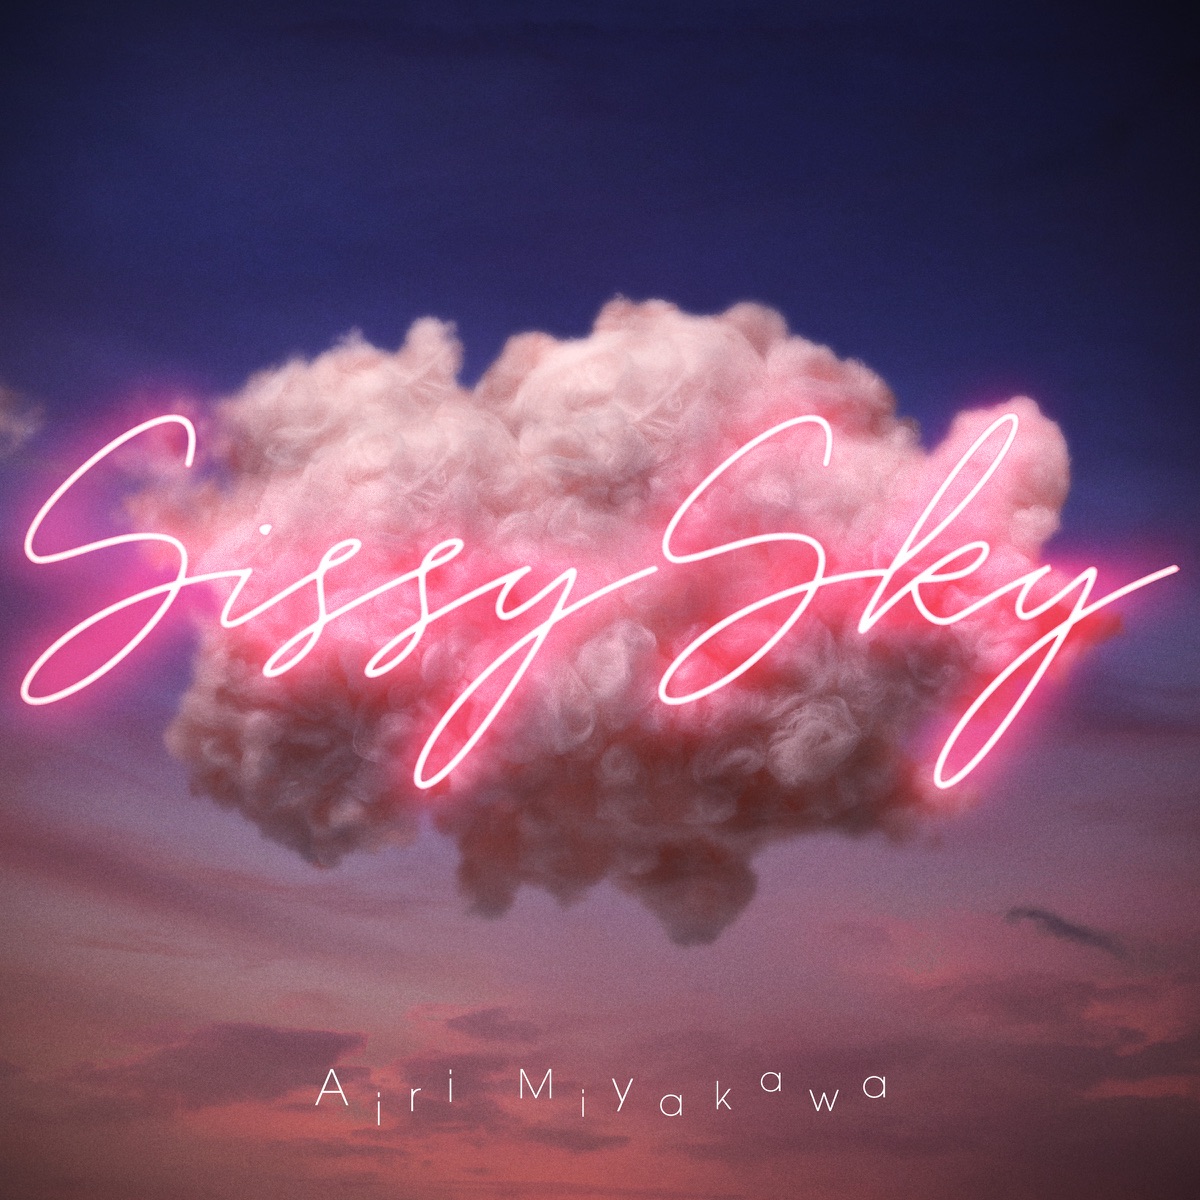 Cover art for『Airi Miyakawa - Sissy Sky』from the release『Sissy Sky』